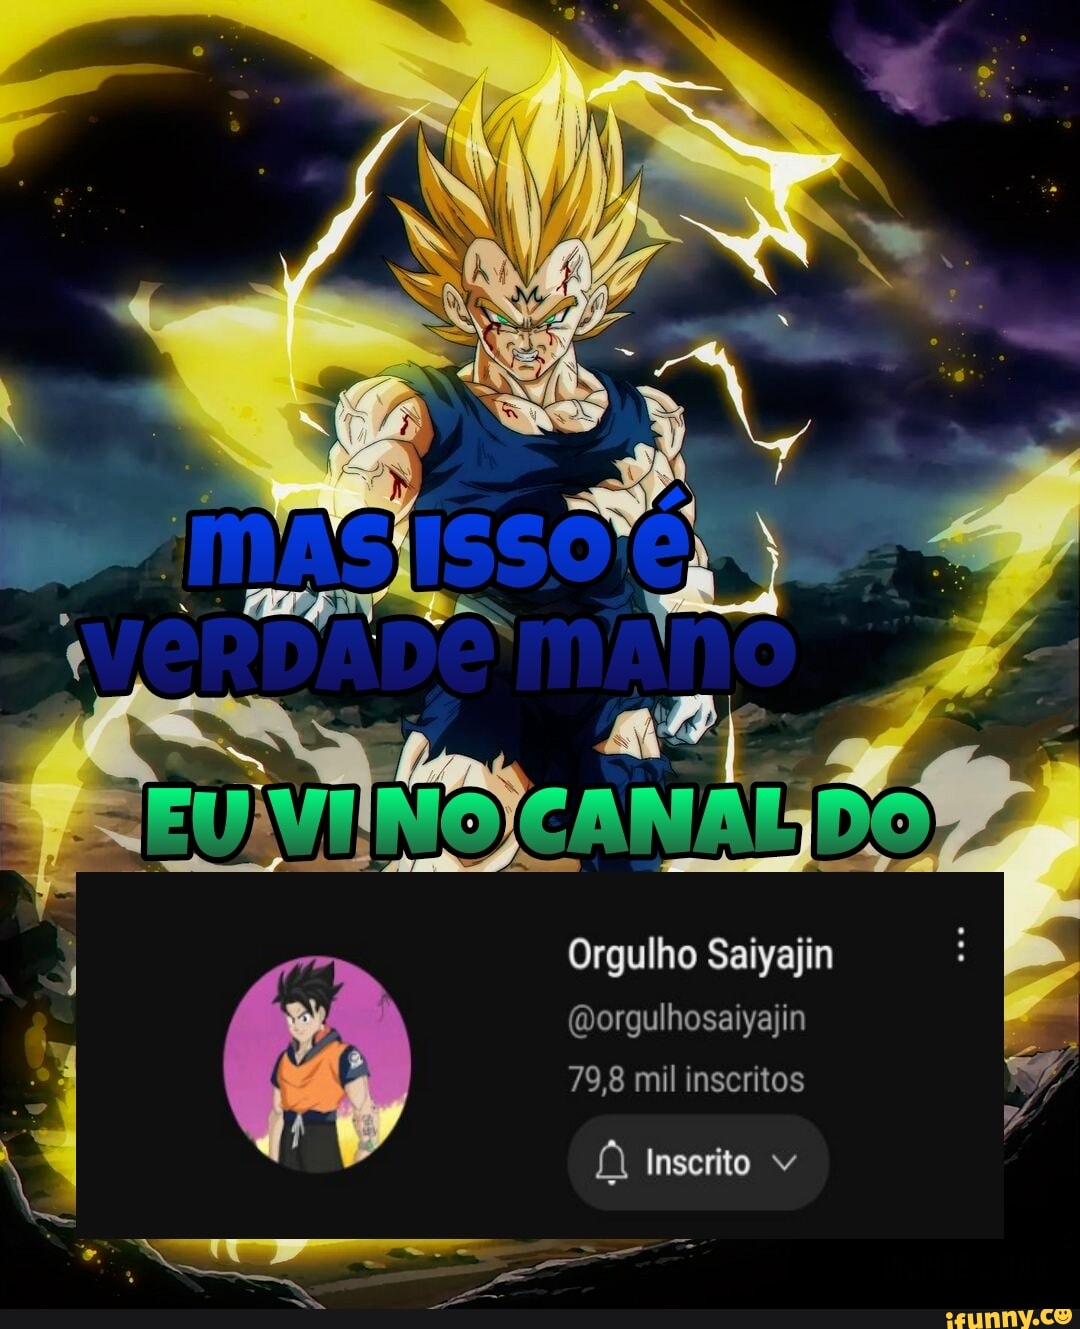 Super Sayajin Infinito - iFunny Brazil